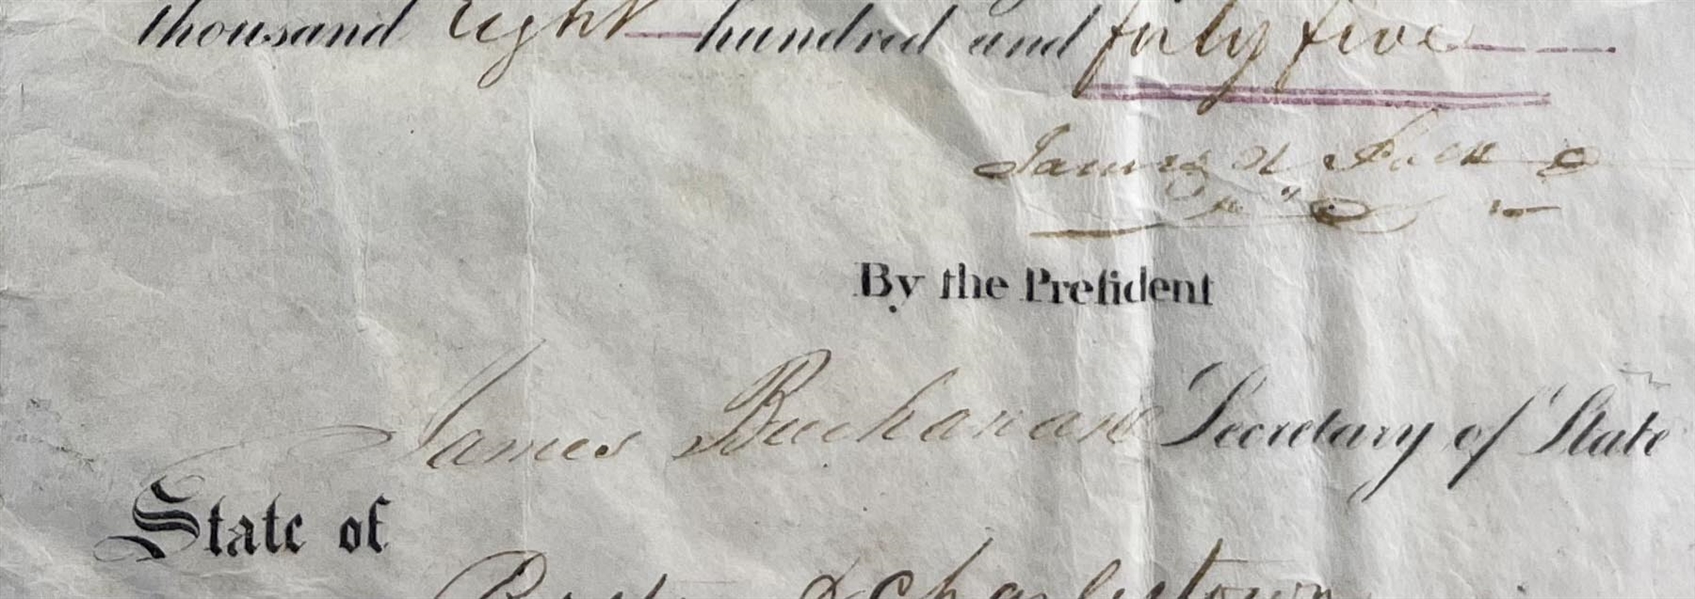 Ships Passport signed by James K. Polk as president and James Buchanan 